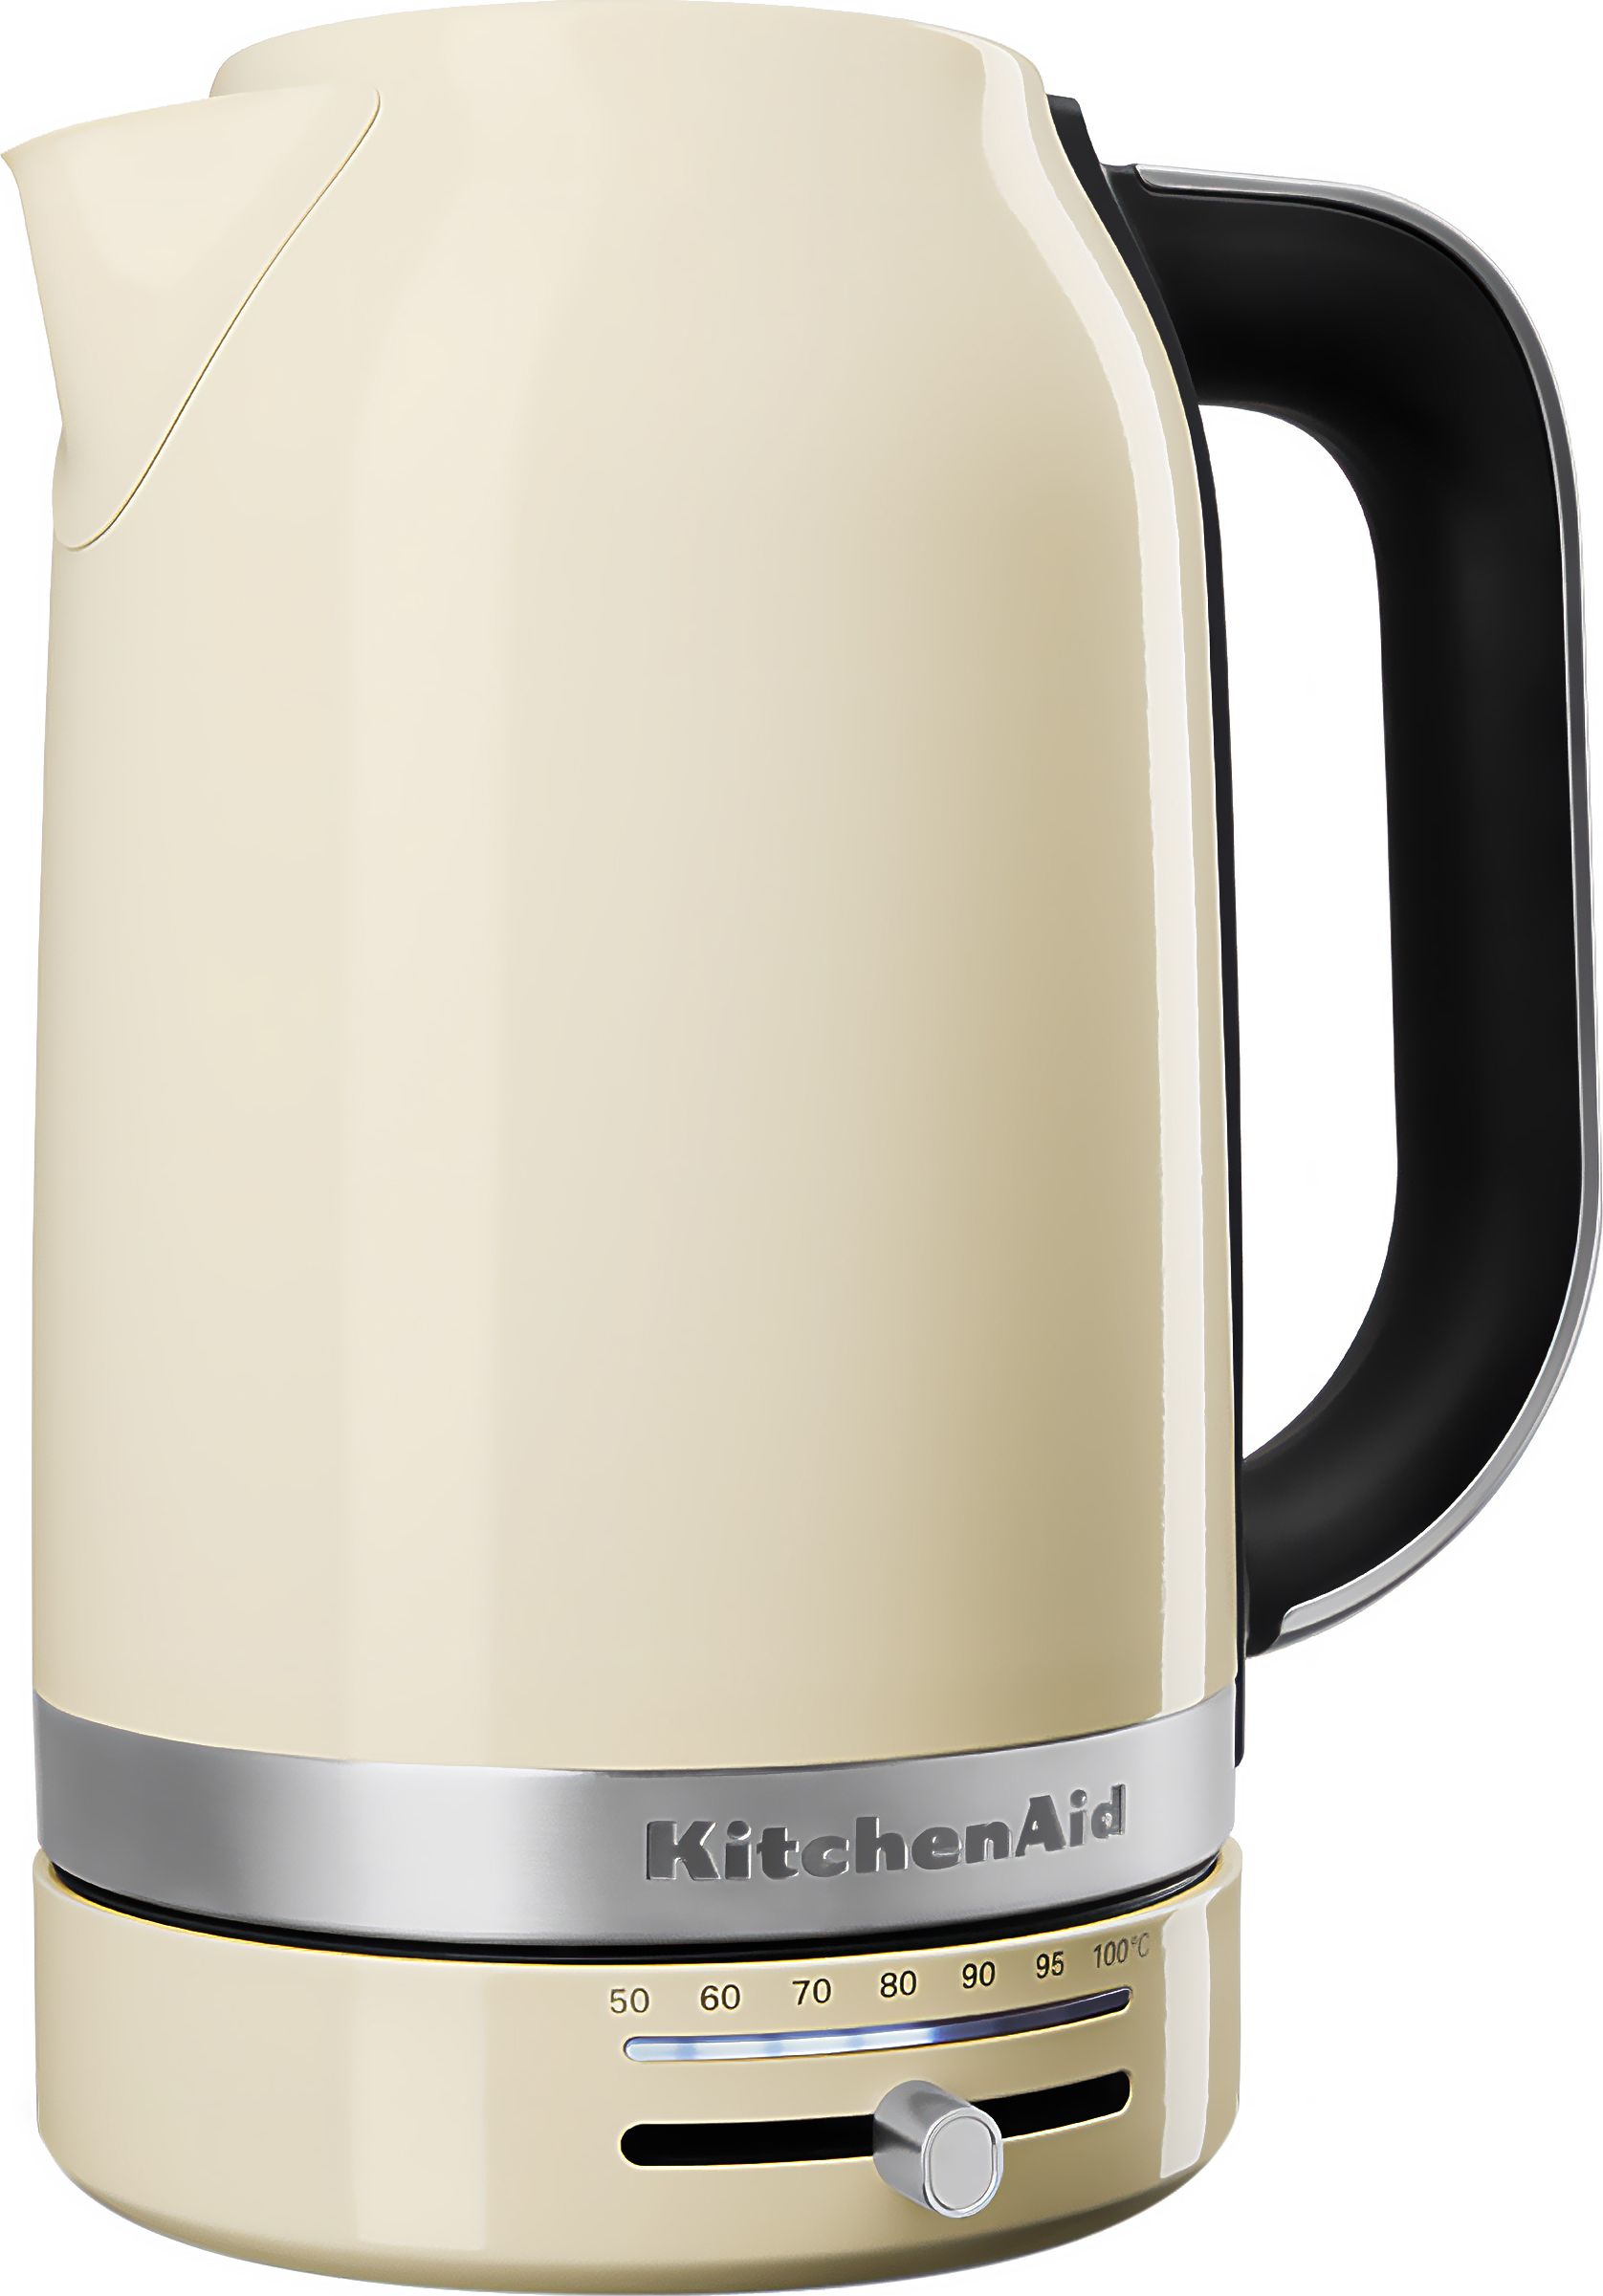 KitchenAid 5KEK1701BAC Kettle - Almond Cream, Cream